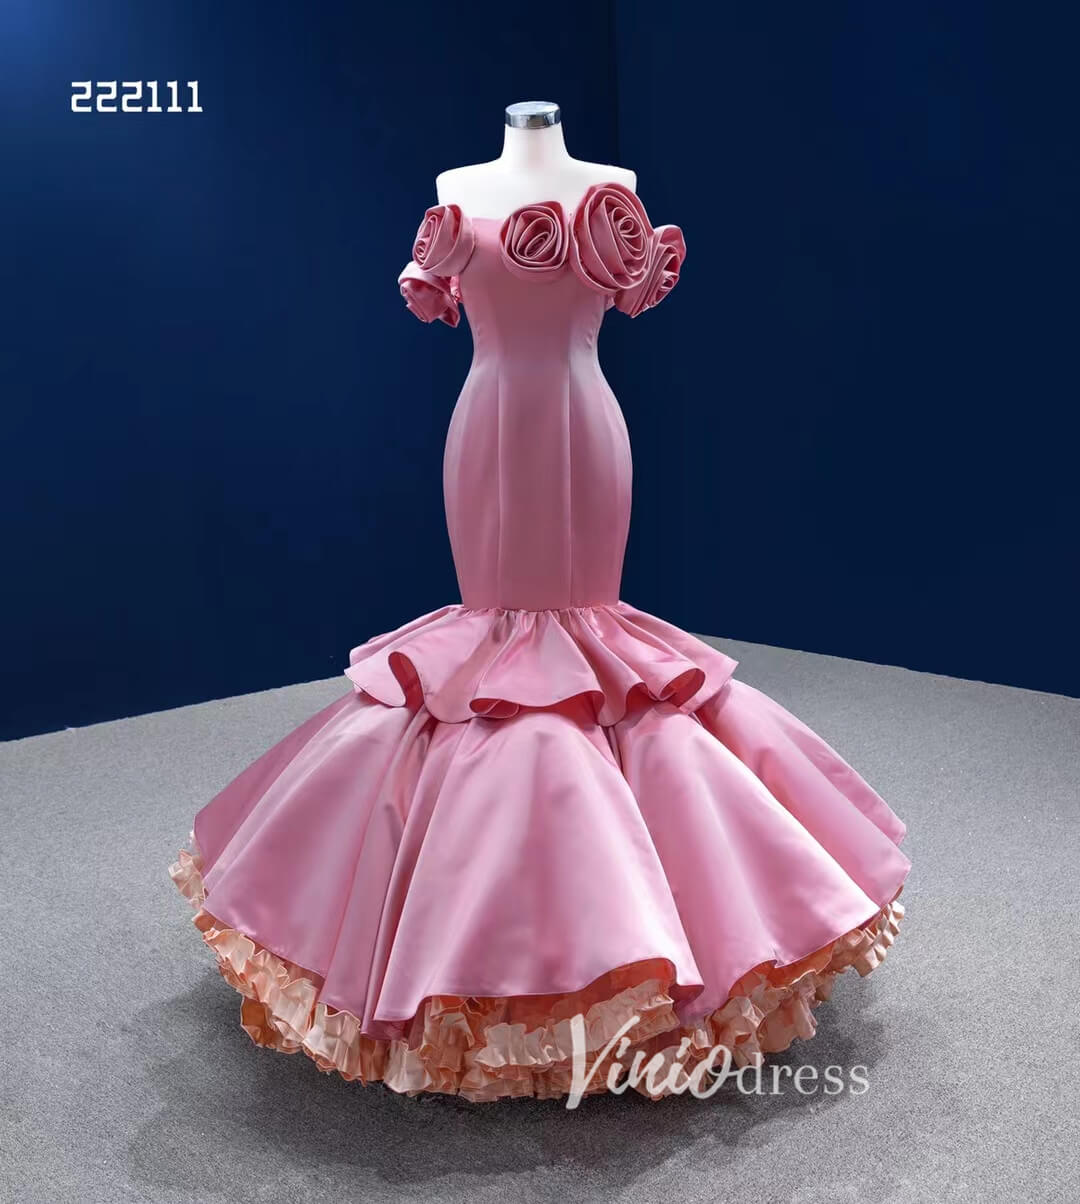 Bright Pink Mermaid Wedding Dress 3D Flower Pageant Dress 222111-wedding dresses-Viniodress-Viniodress